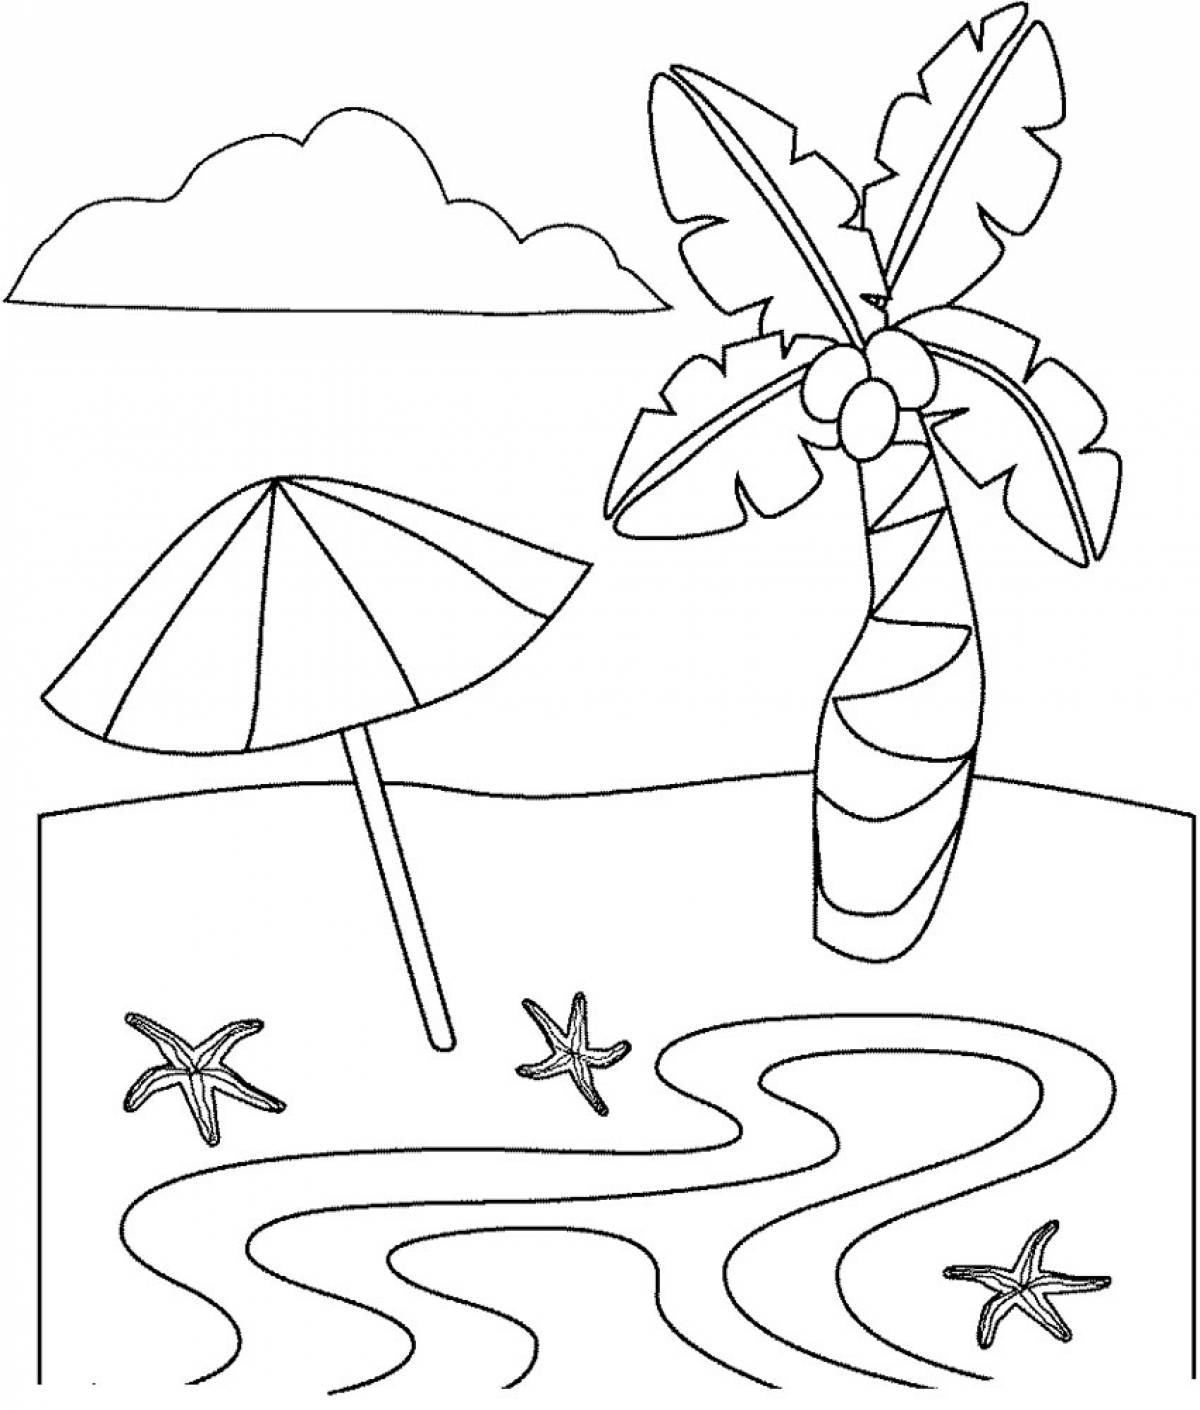 Palm tree and umbrella